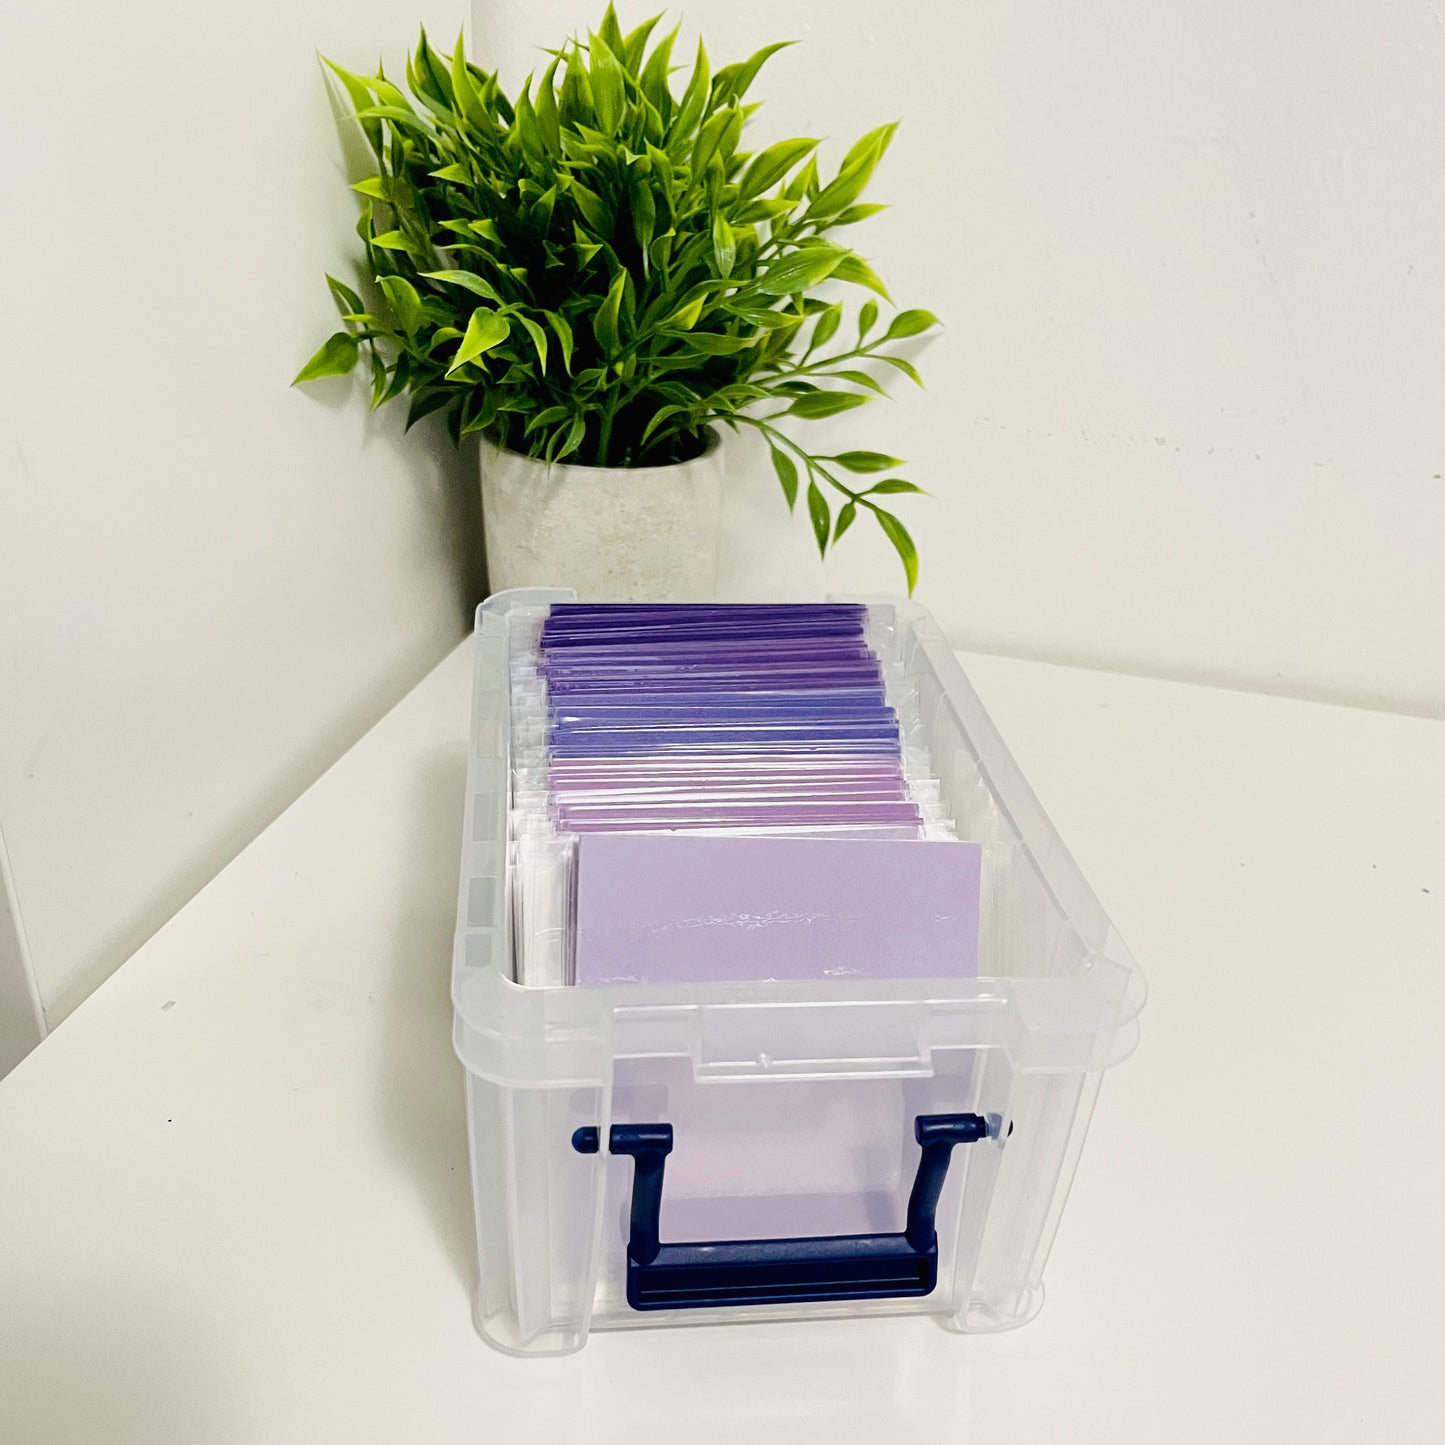 50 Envelopes Savings Challenge Box